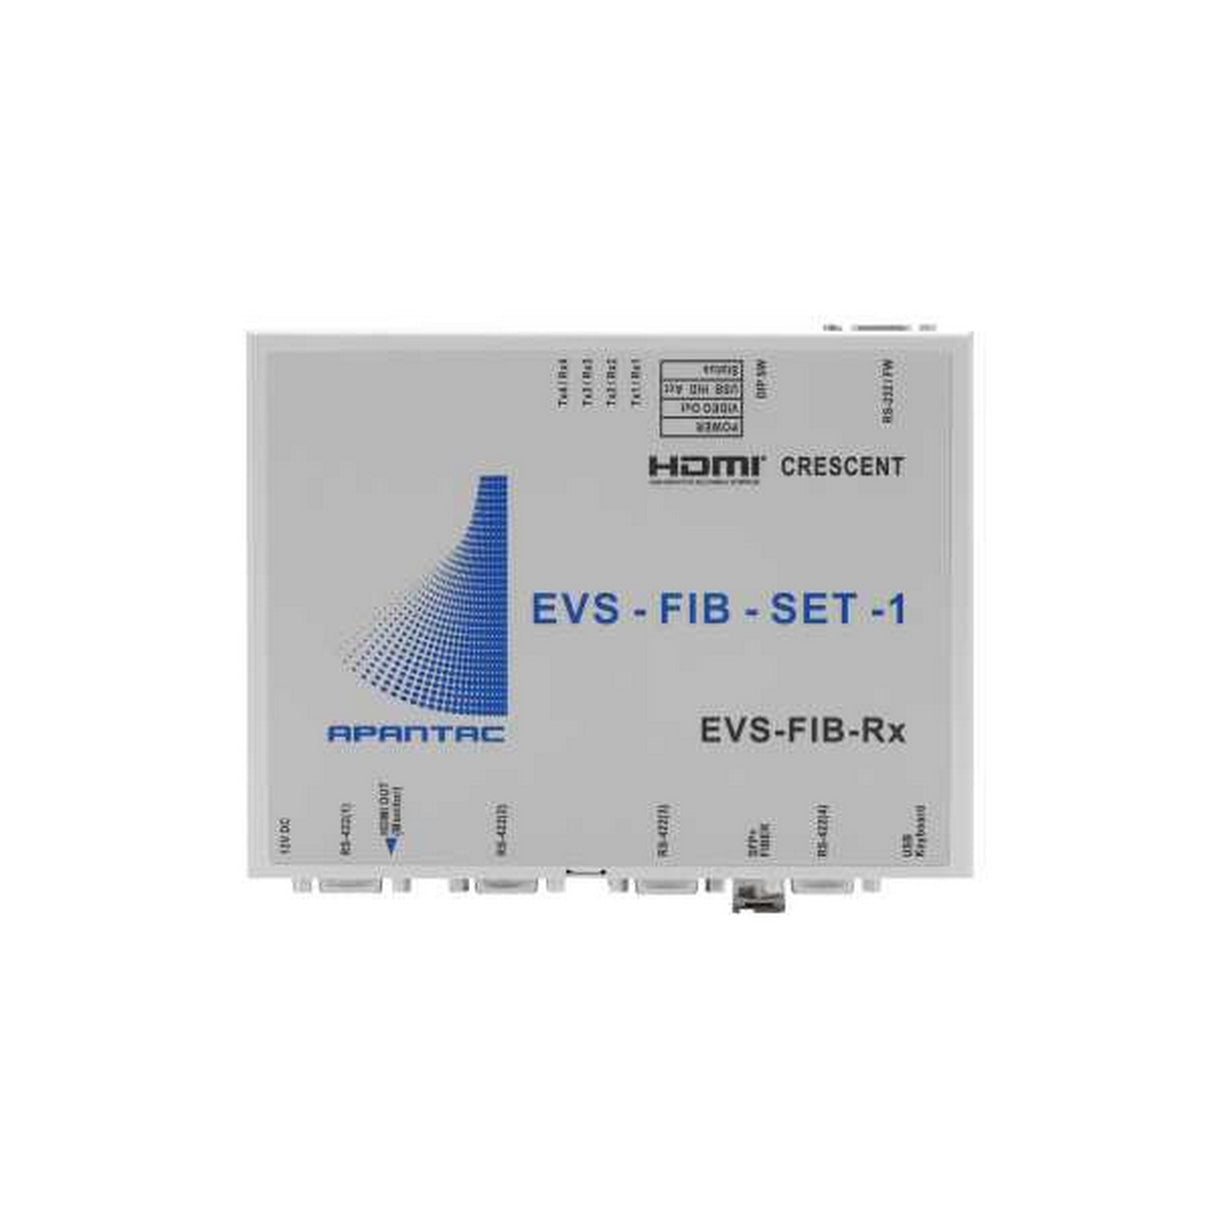 Apantac EVS-FIB-Rx USB 4 x RS-422 and HDMI Receiver for EVS